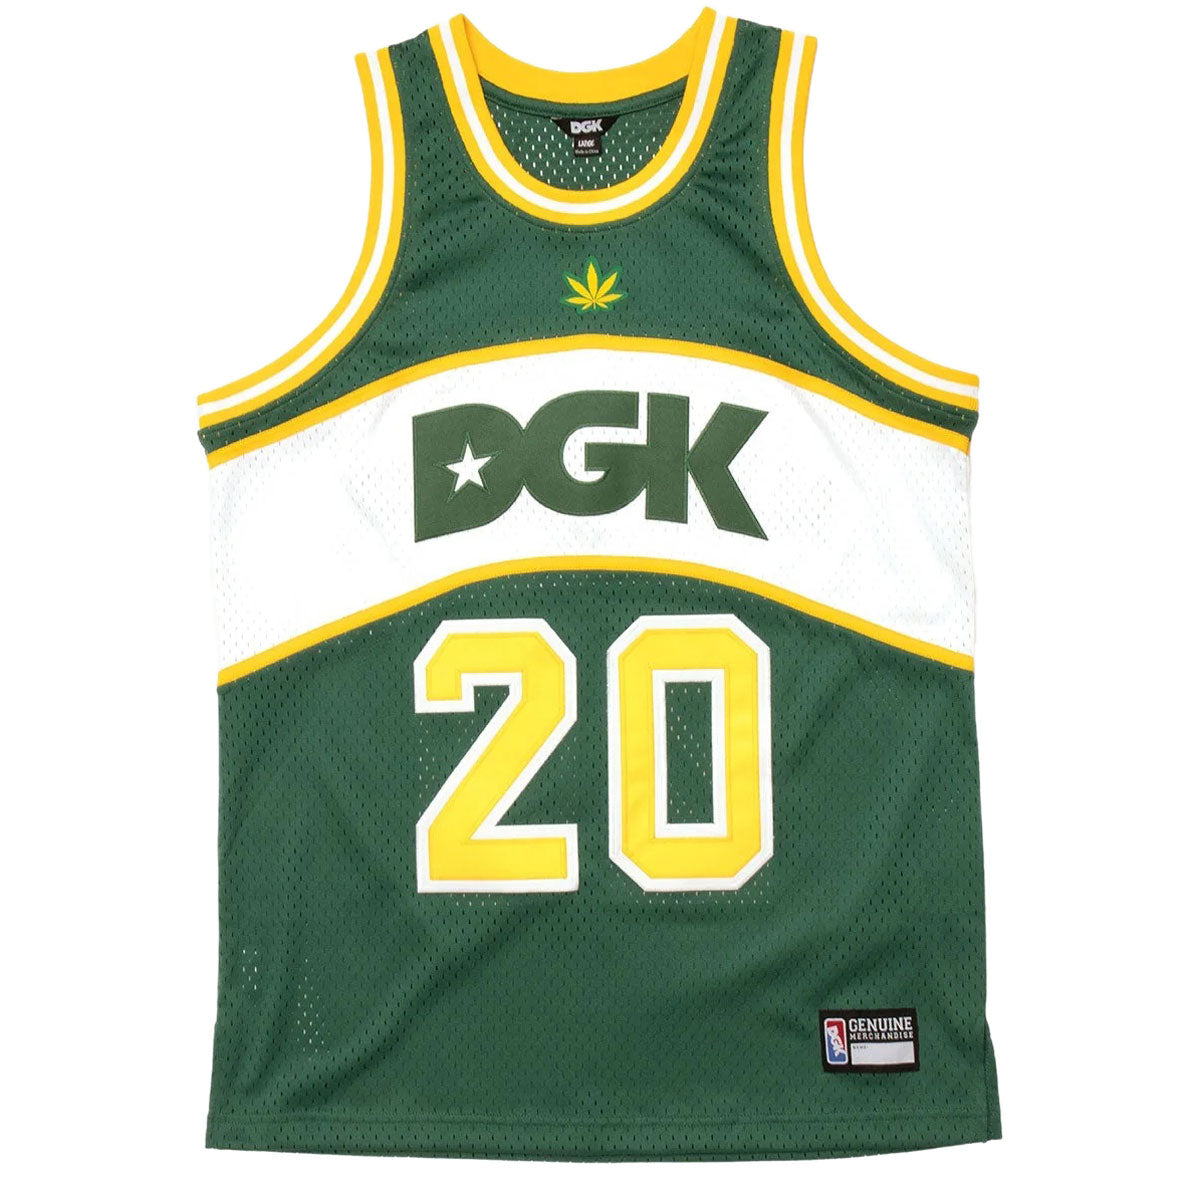 DGK Team Indica Basketball Tank Top - Green image 1